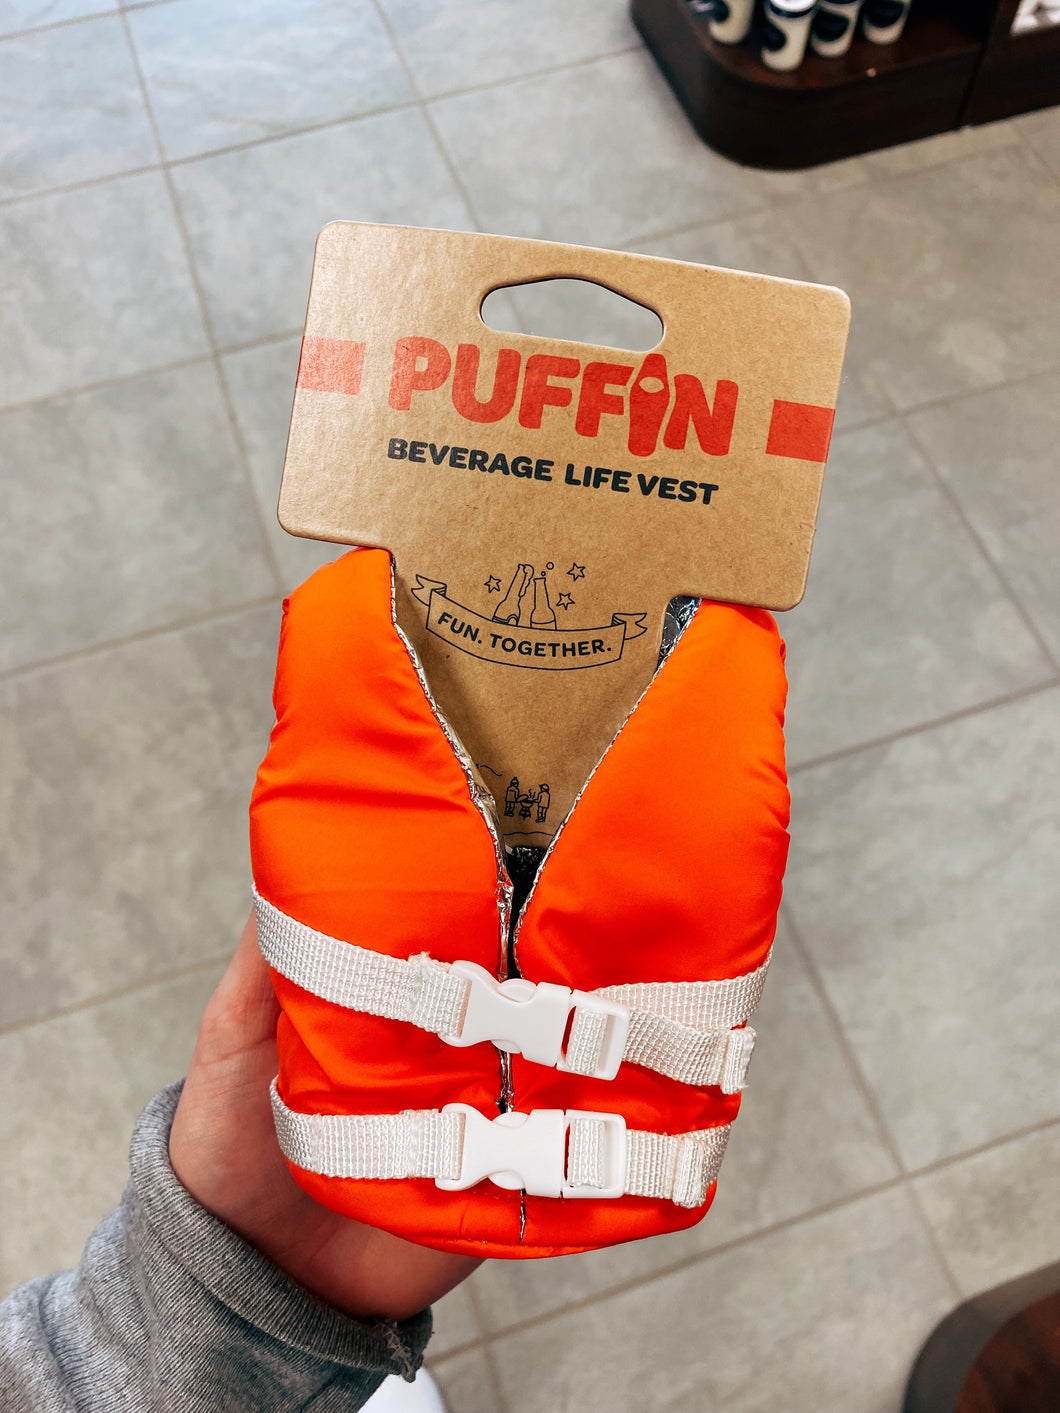 Puffin— Beverage Life Vest